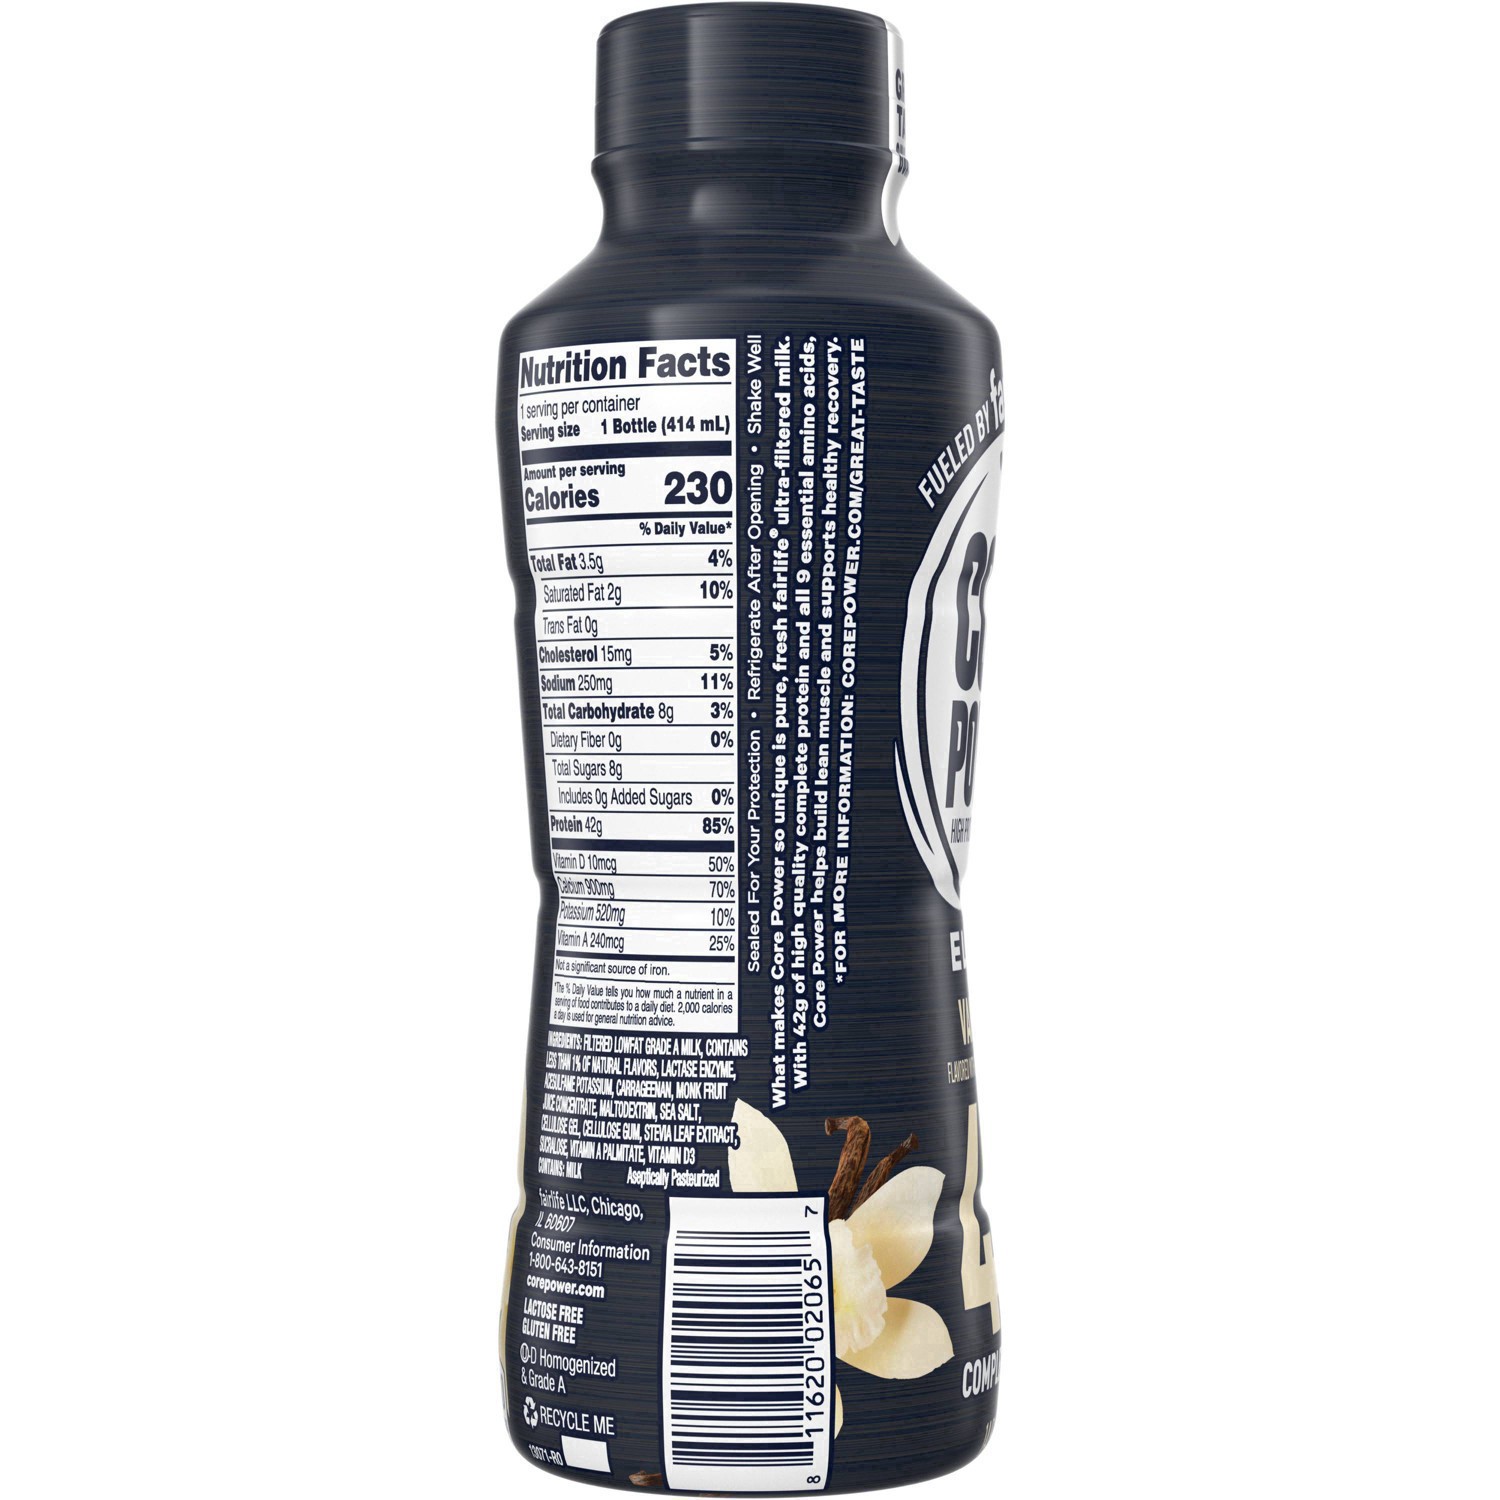 slide 30 of 78, Core Power High Protein Elite Vanilla Milk Shake 14 fl oz, 14 fl oz